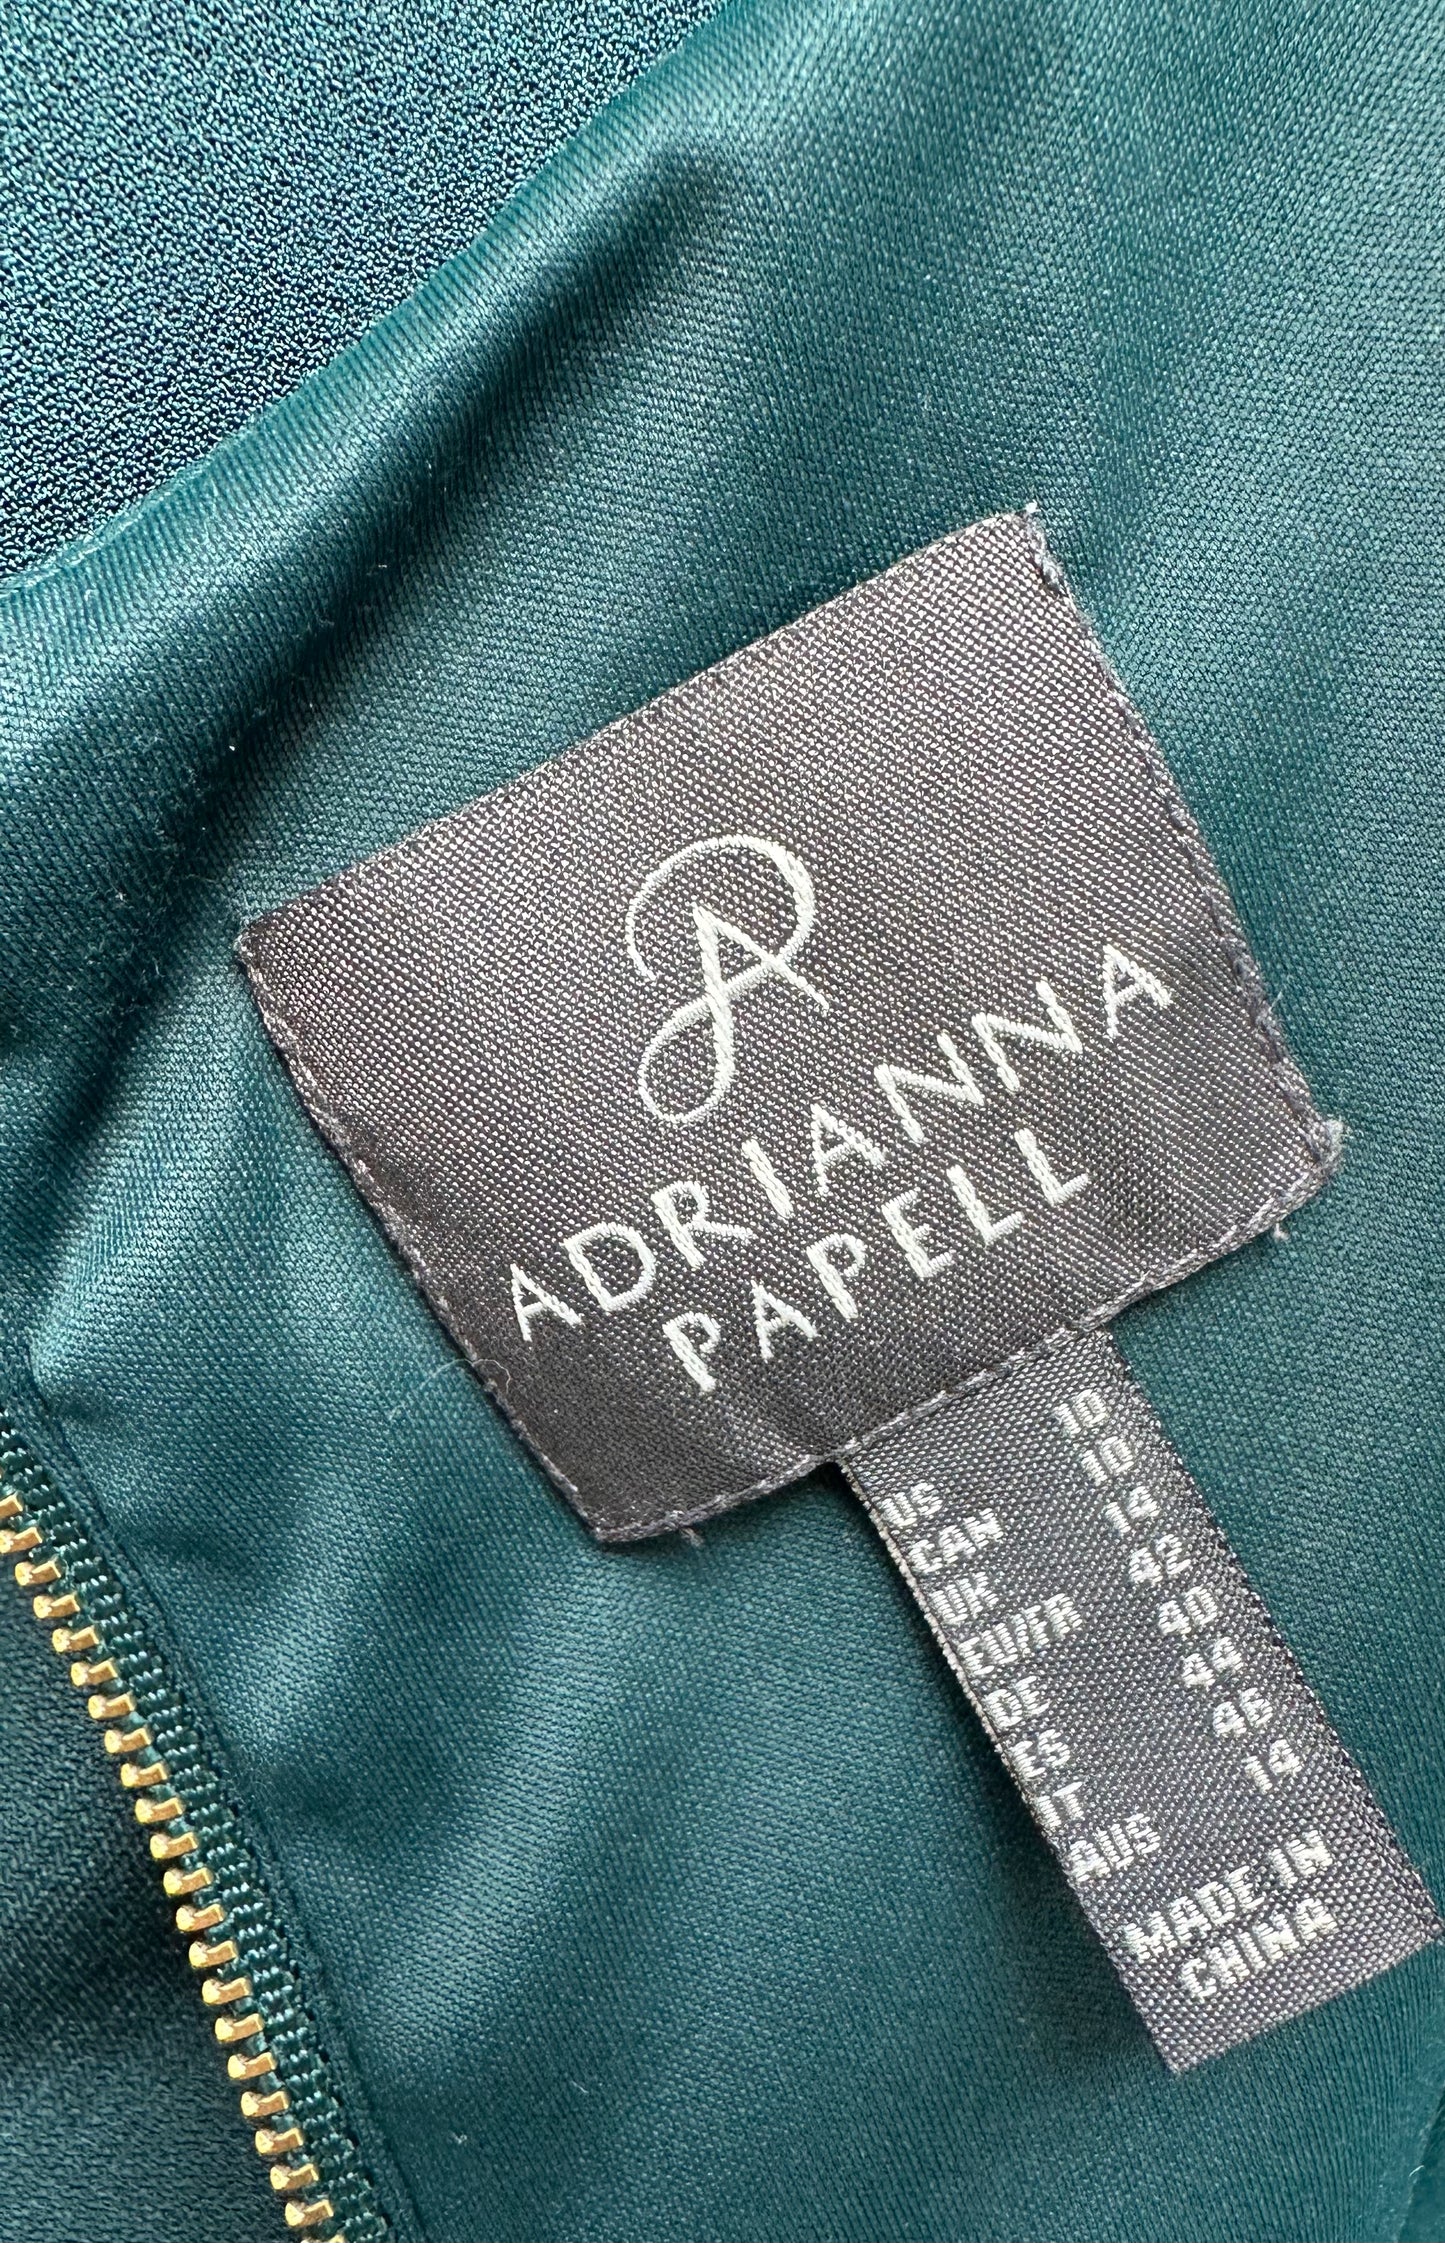 Adrianna Papell groene jurk maat 40